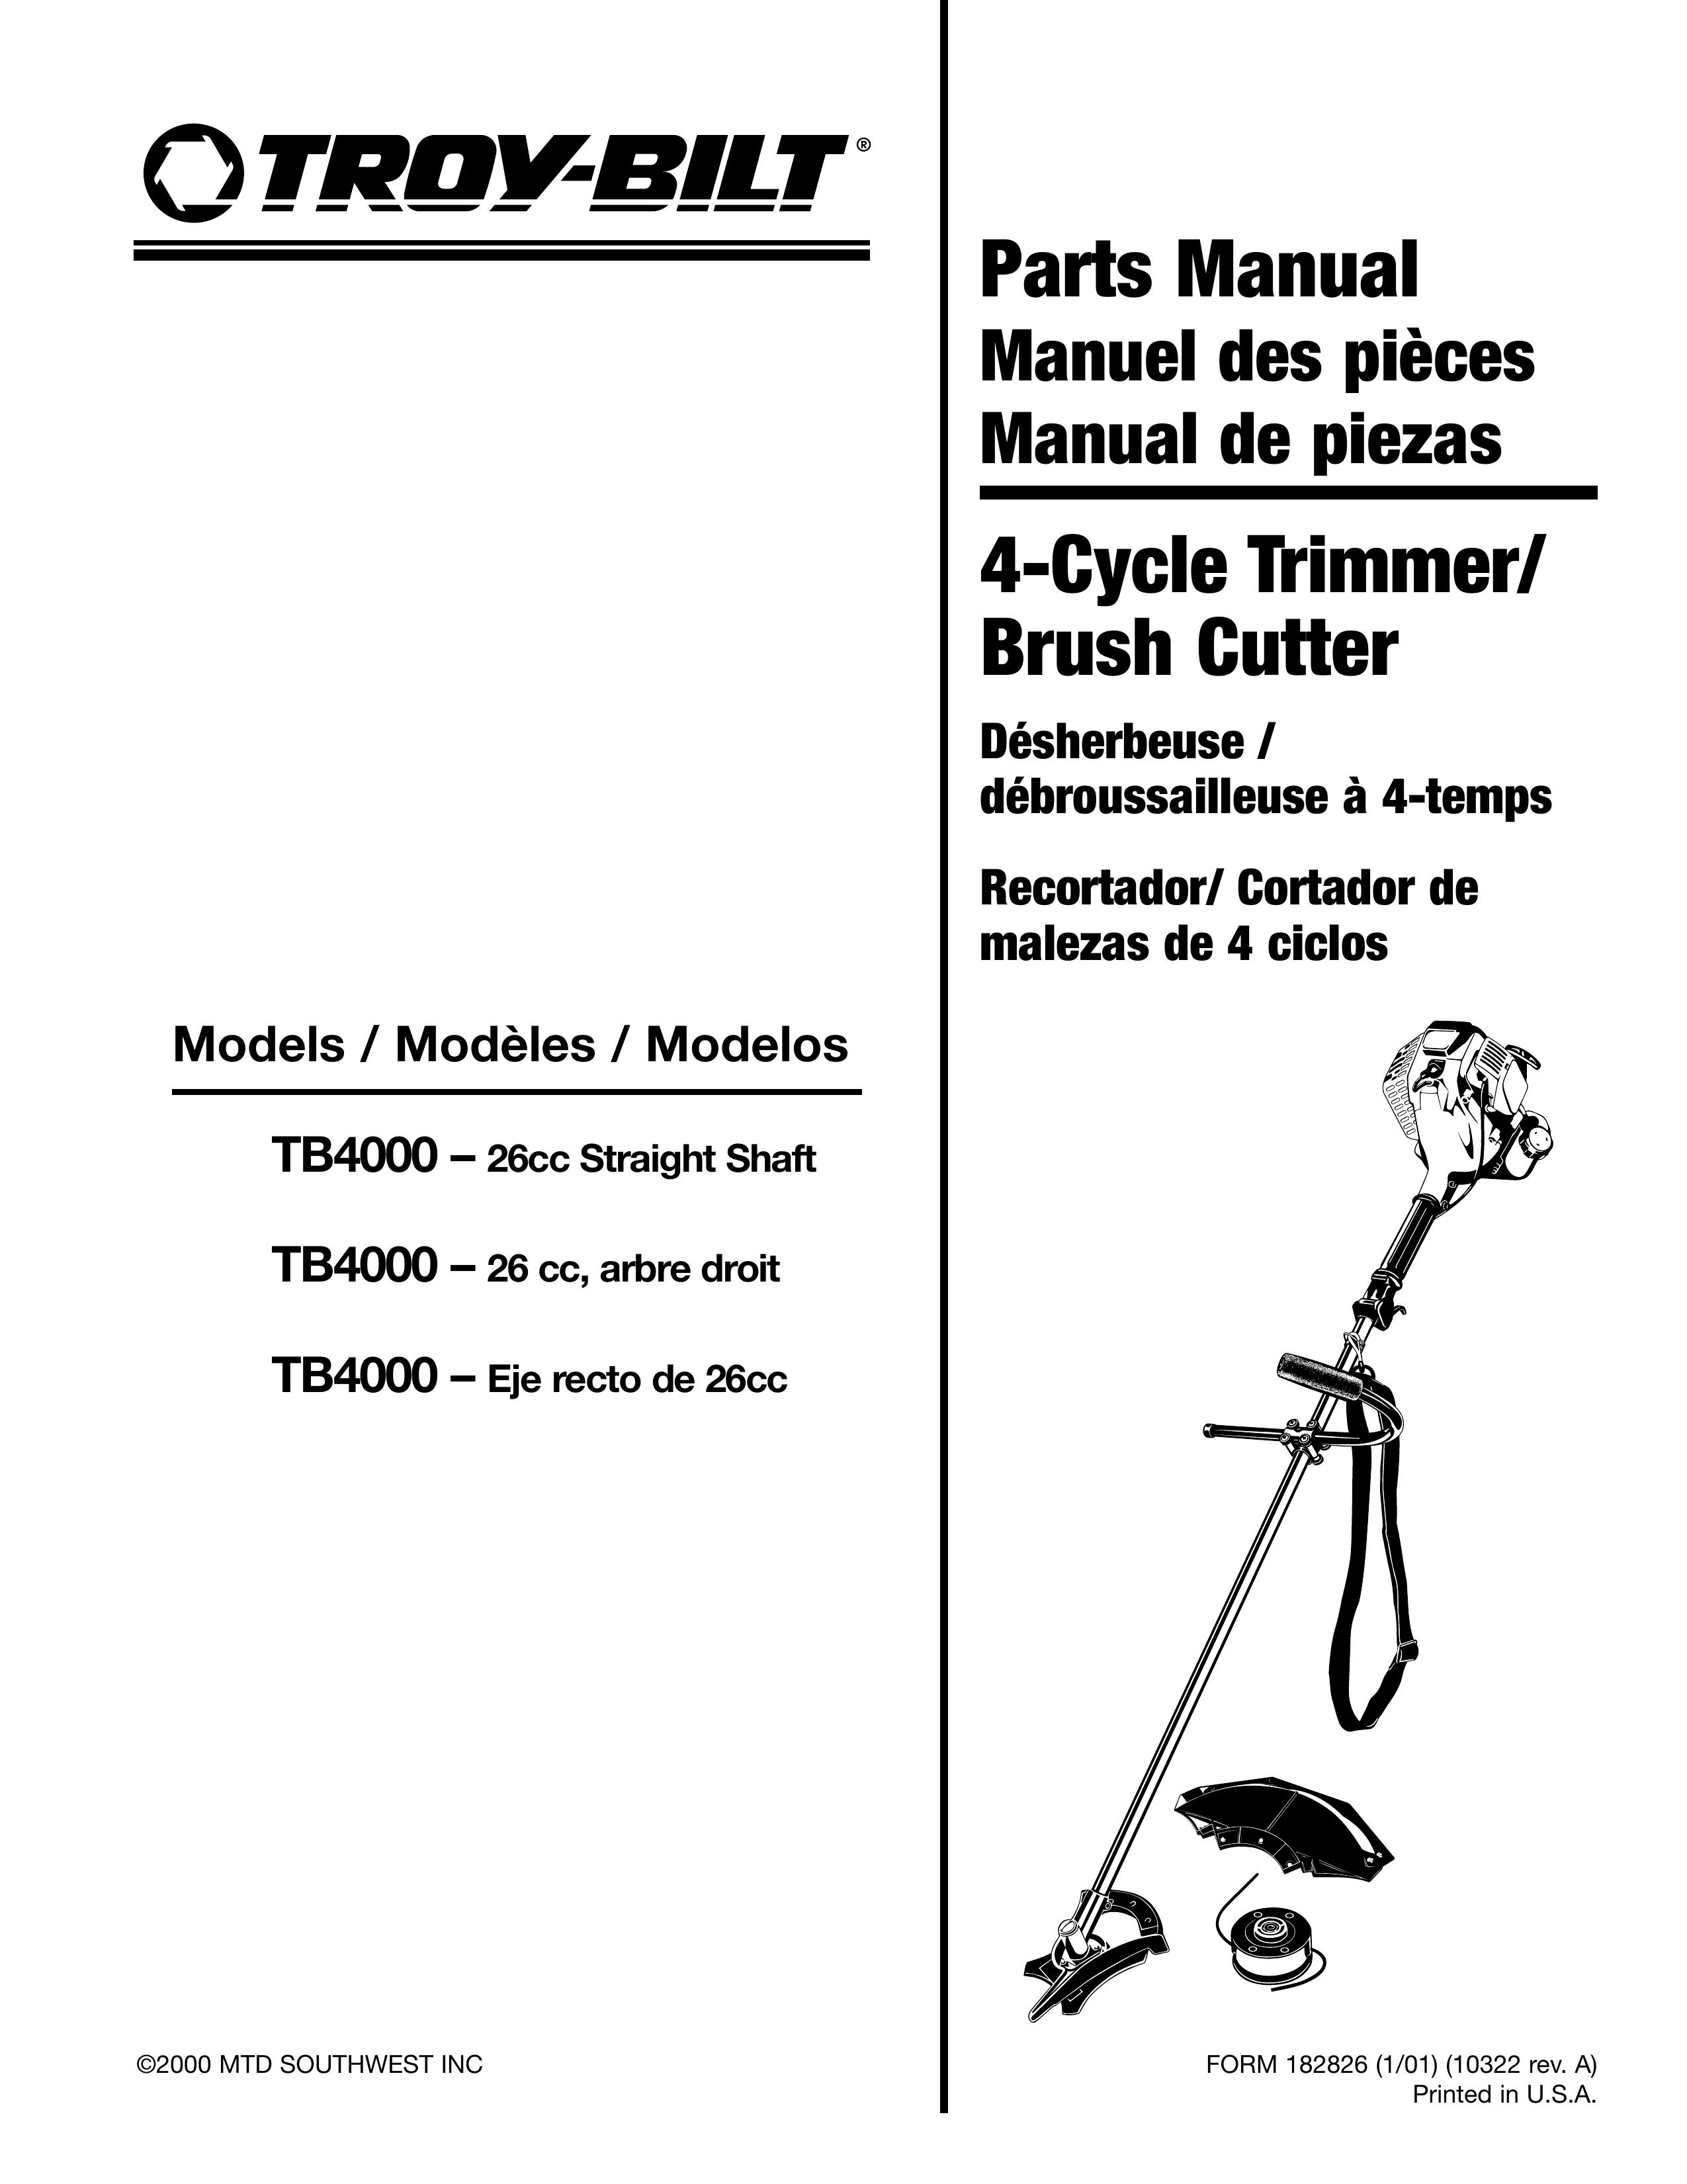 Troy-Bilt TB4000 Brush Cutter User Manual